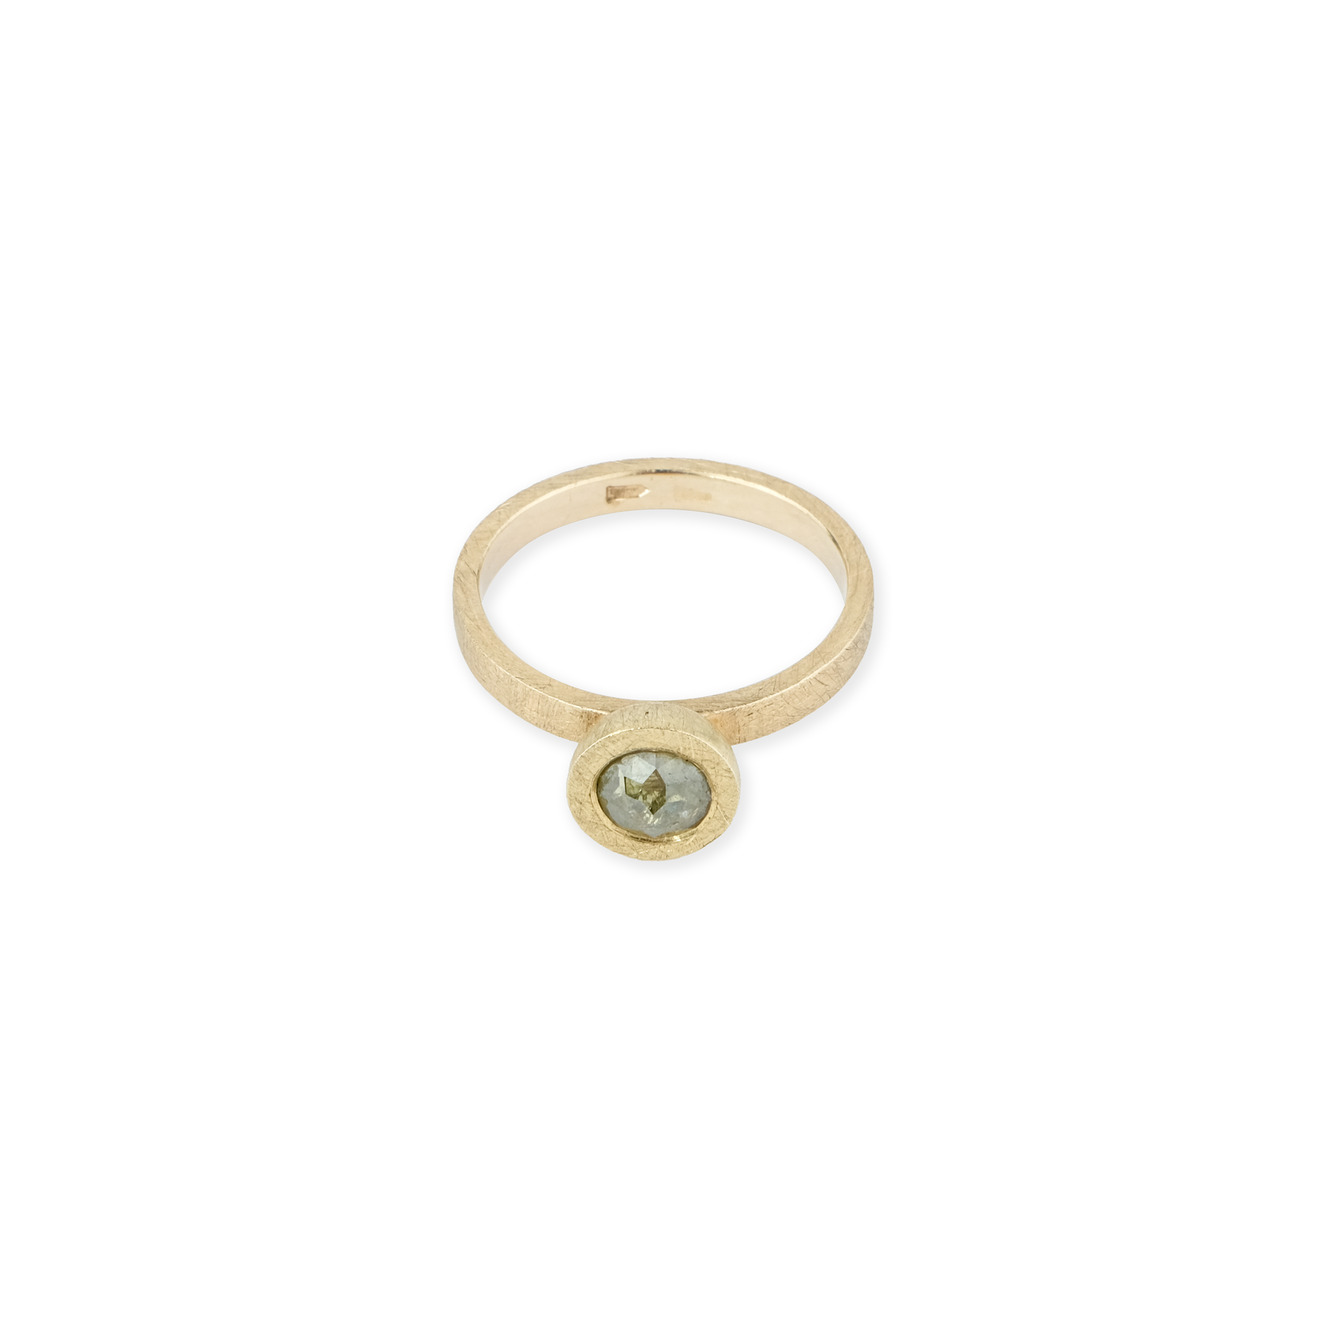 The EGO Кольцо Fragile rose из золота с бриллиантом kintsugi jewelry кольцо fragile rose из золота с бриллиантом